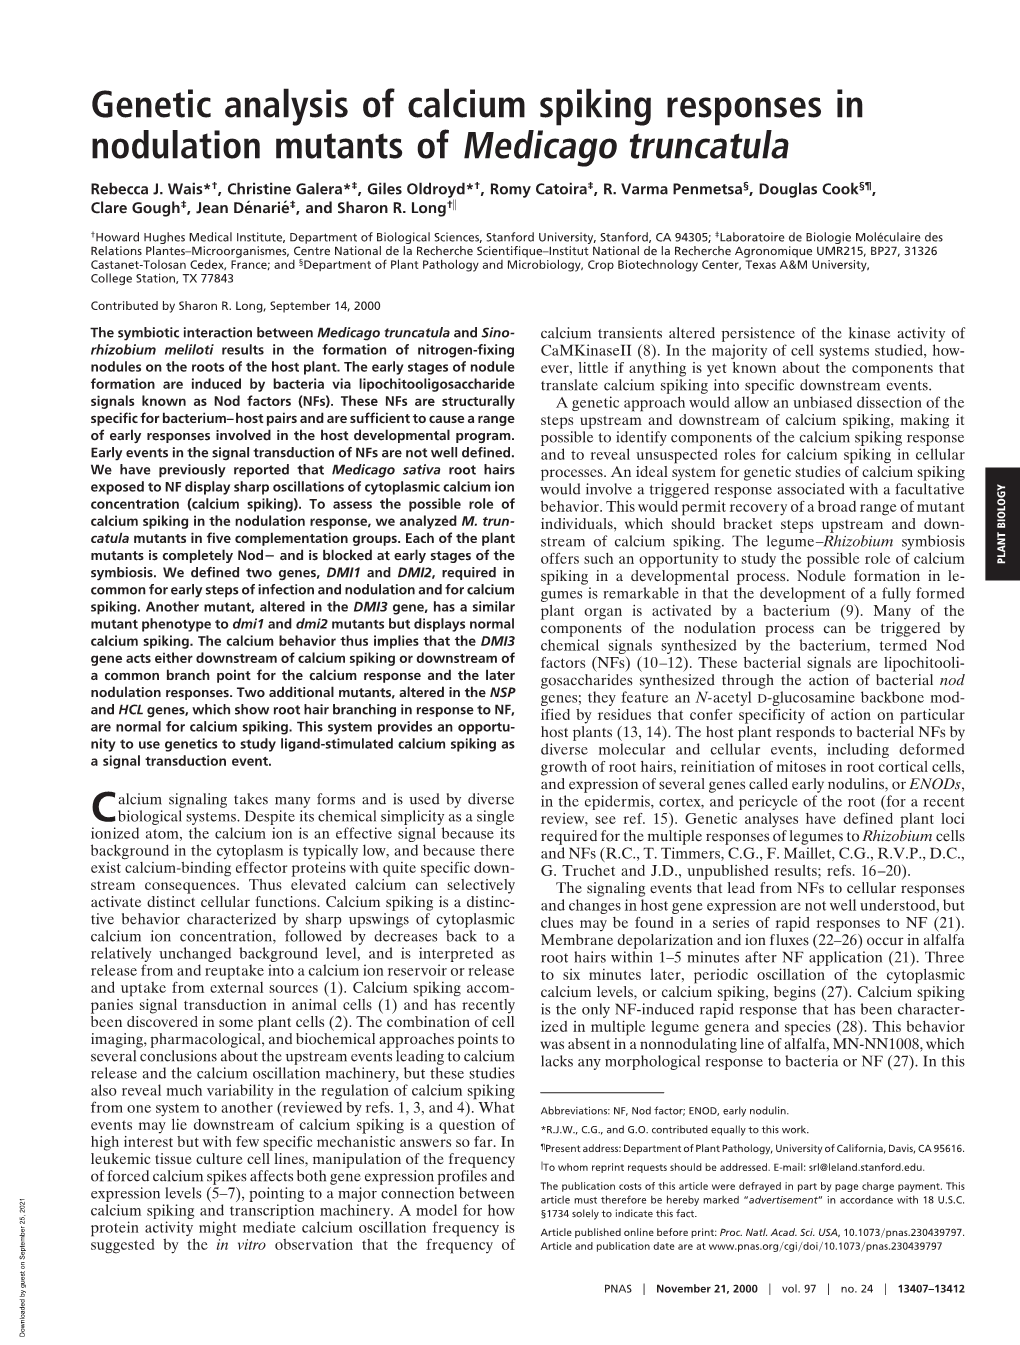 Genetic Analysis of Calcium Spiking Responses in Nodulation Mutants of Medicago Truncatula